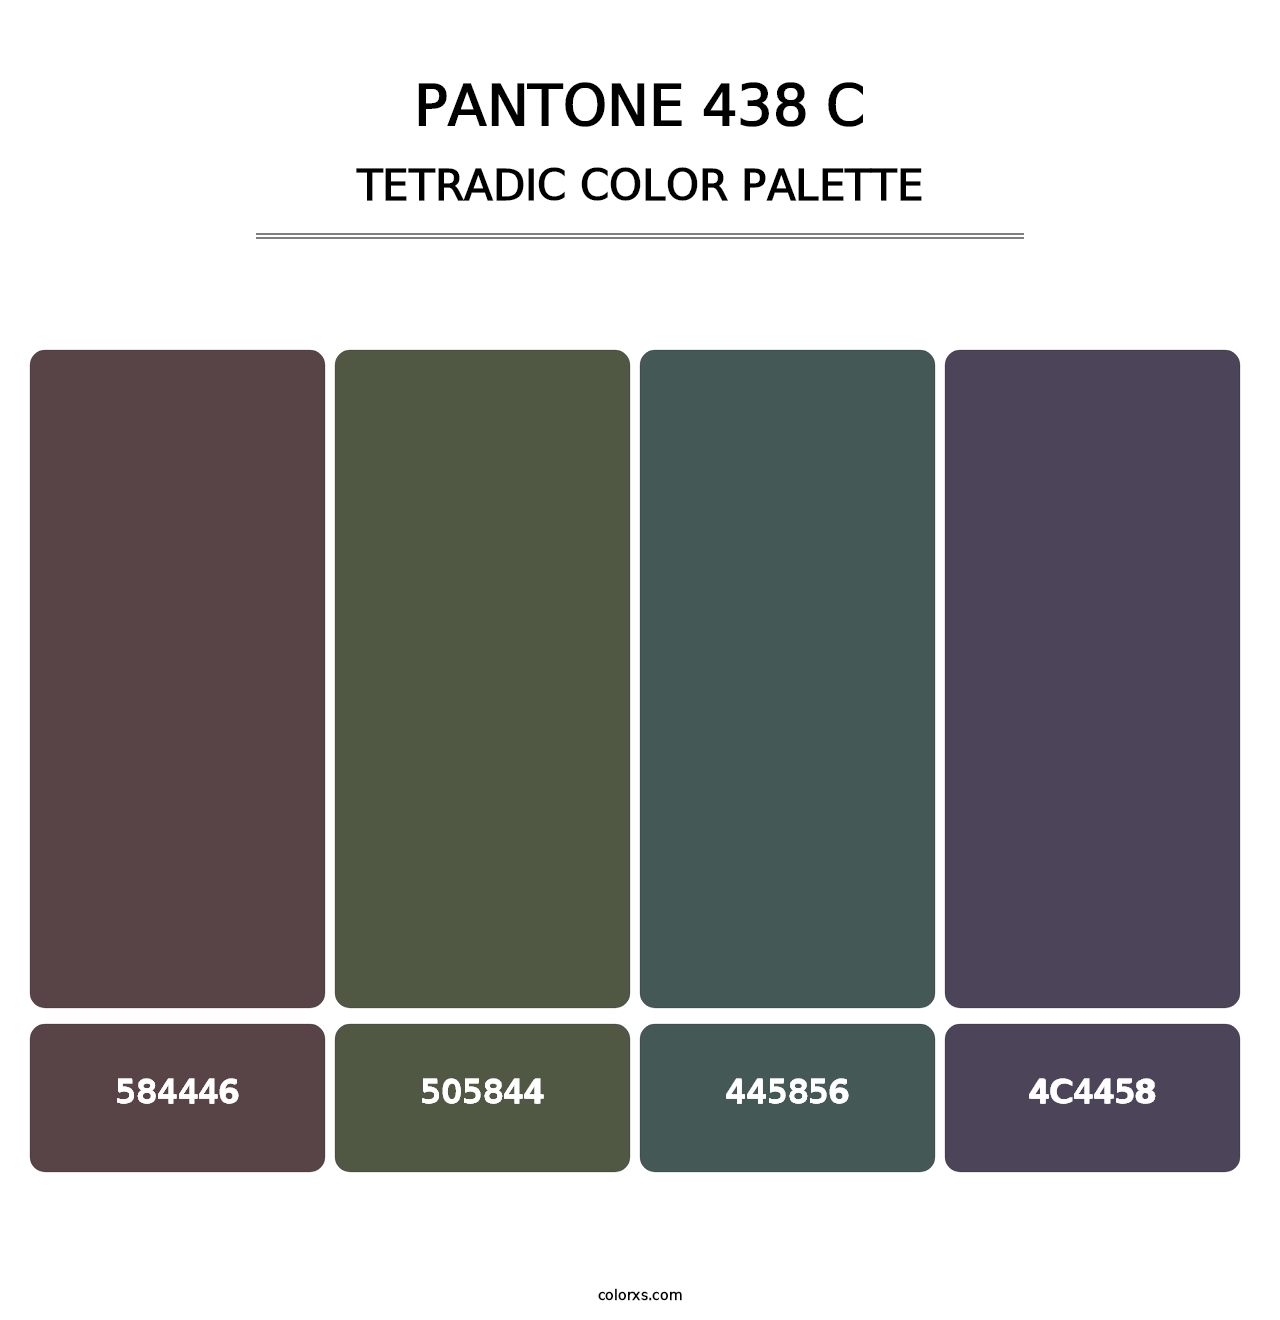 PANTONE 438 C - Tetradic Color Palette